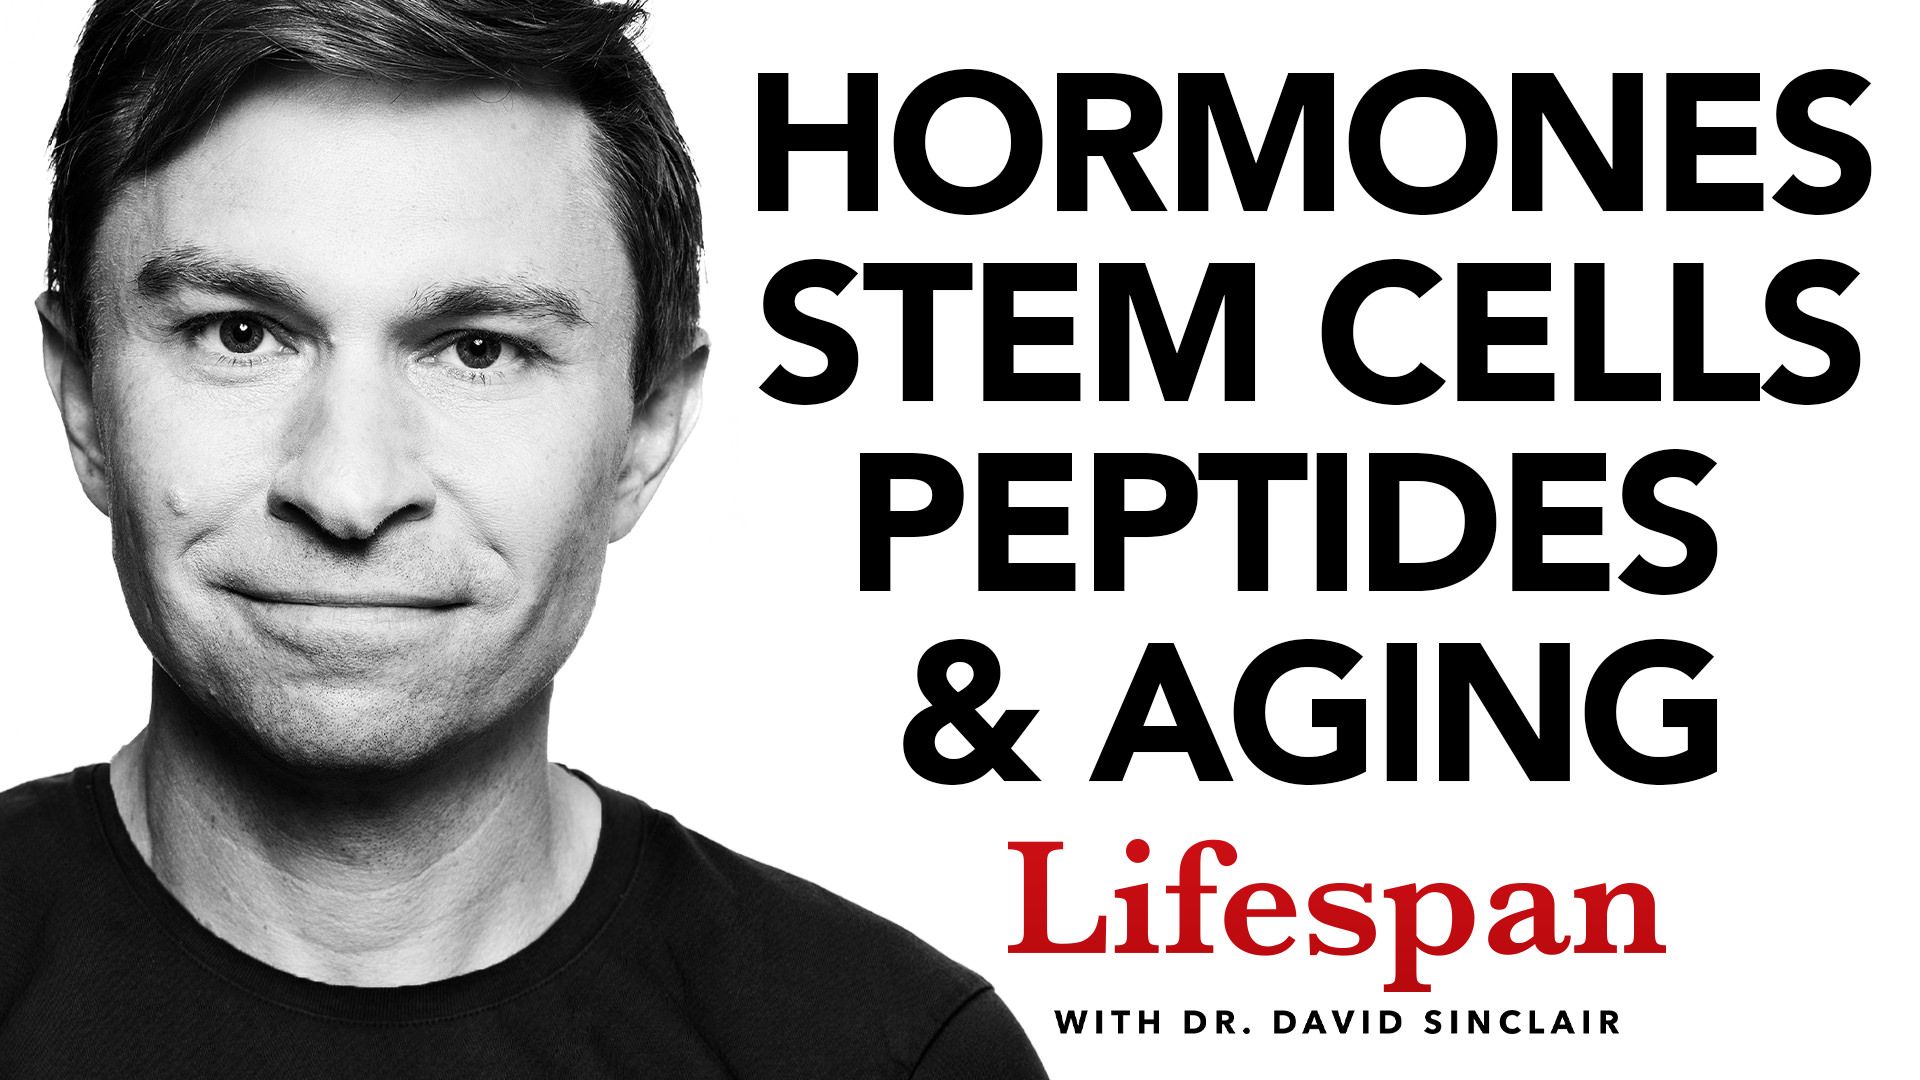 "Hormones Stem Cells Peptides & Aging - Lifespan with Dr. David Sinclair"